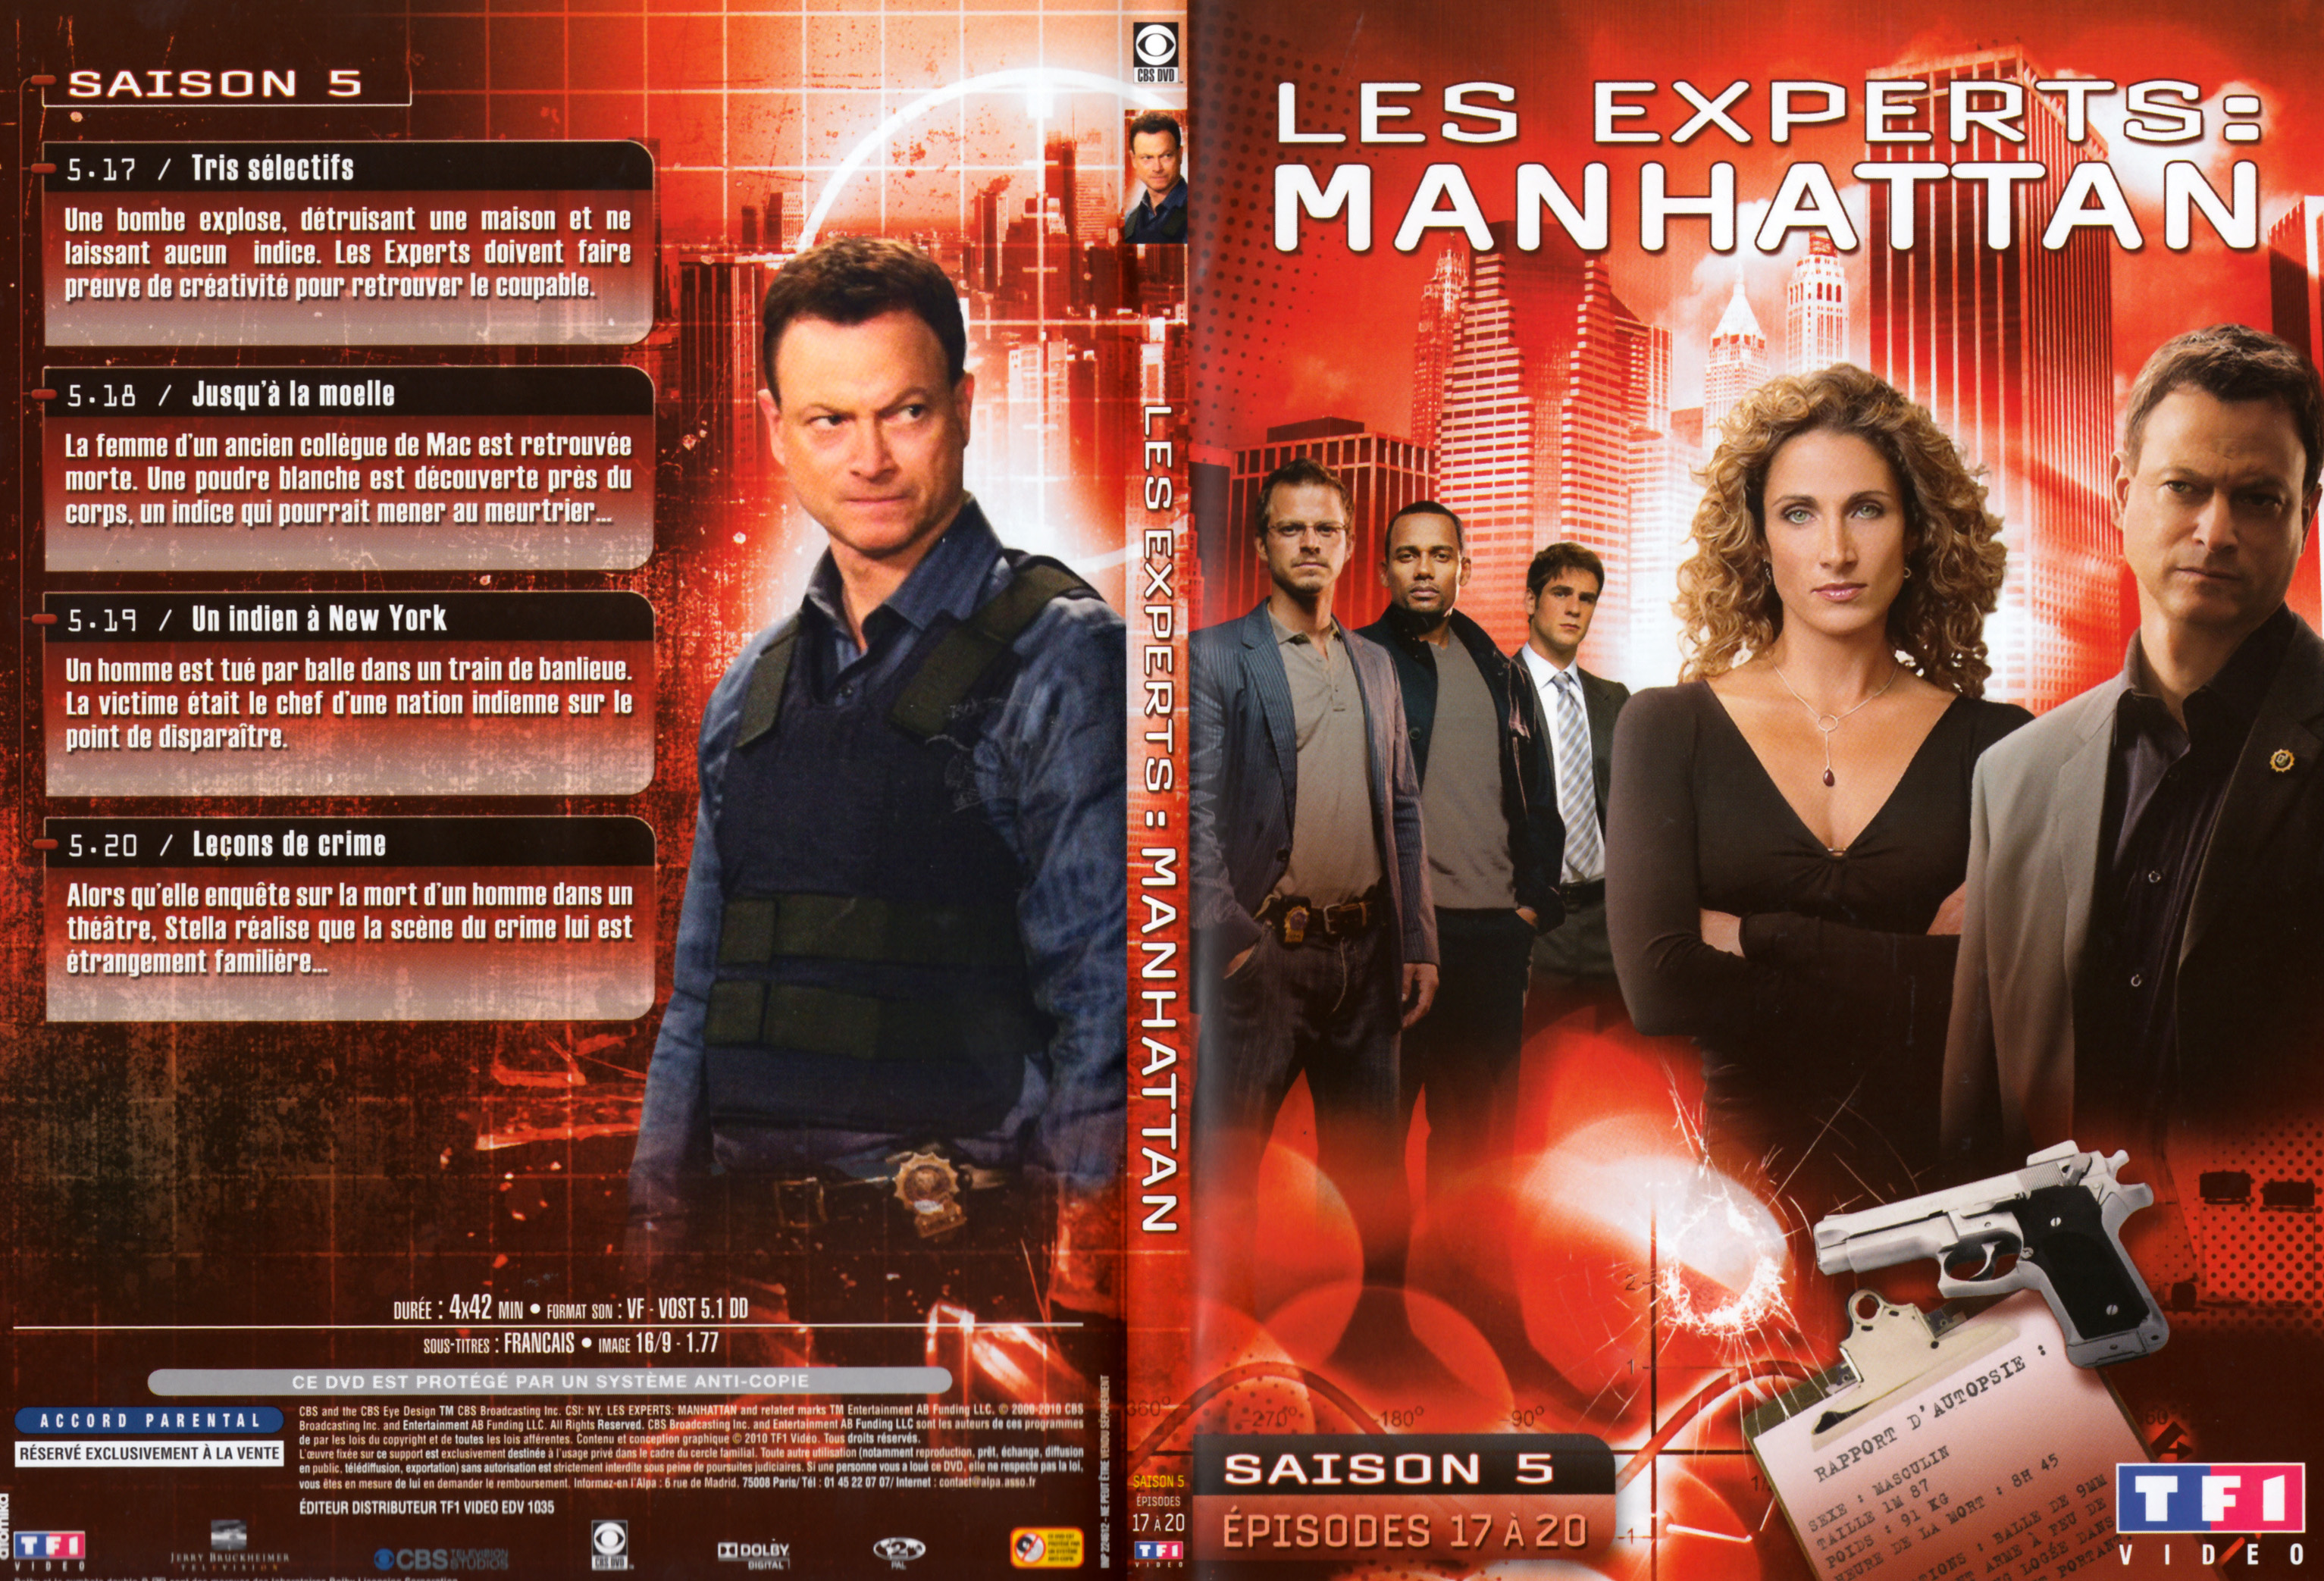 Jaquette DVD Les Experts Manhattan Saison 5 DVD 5